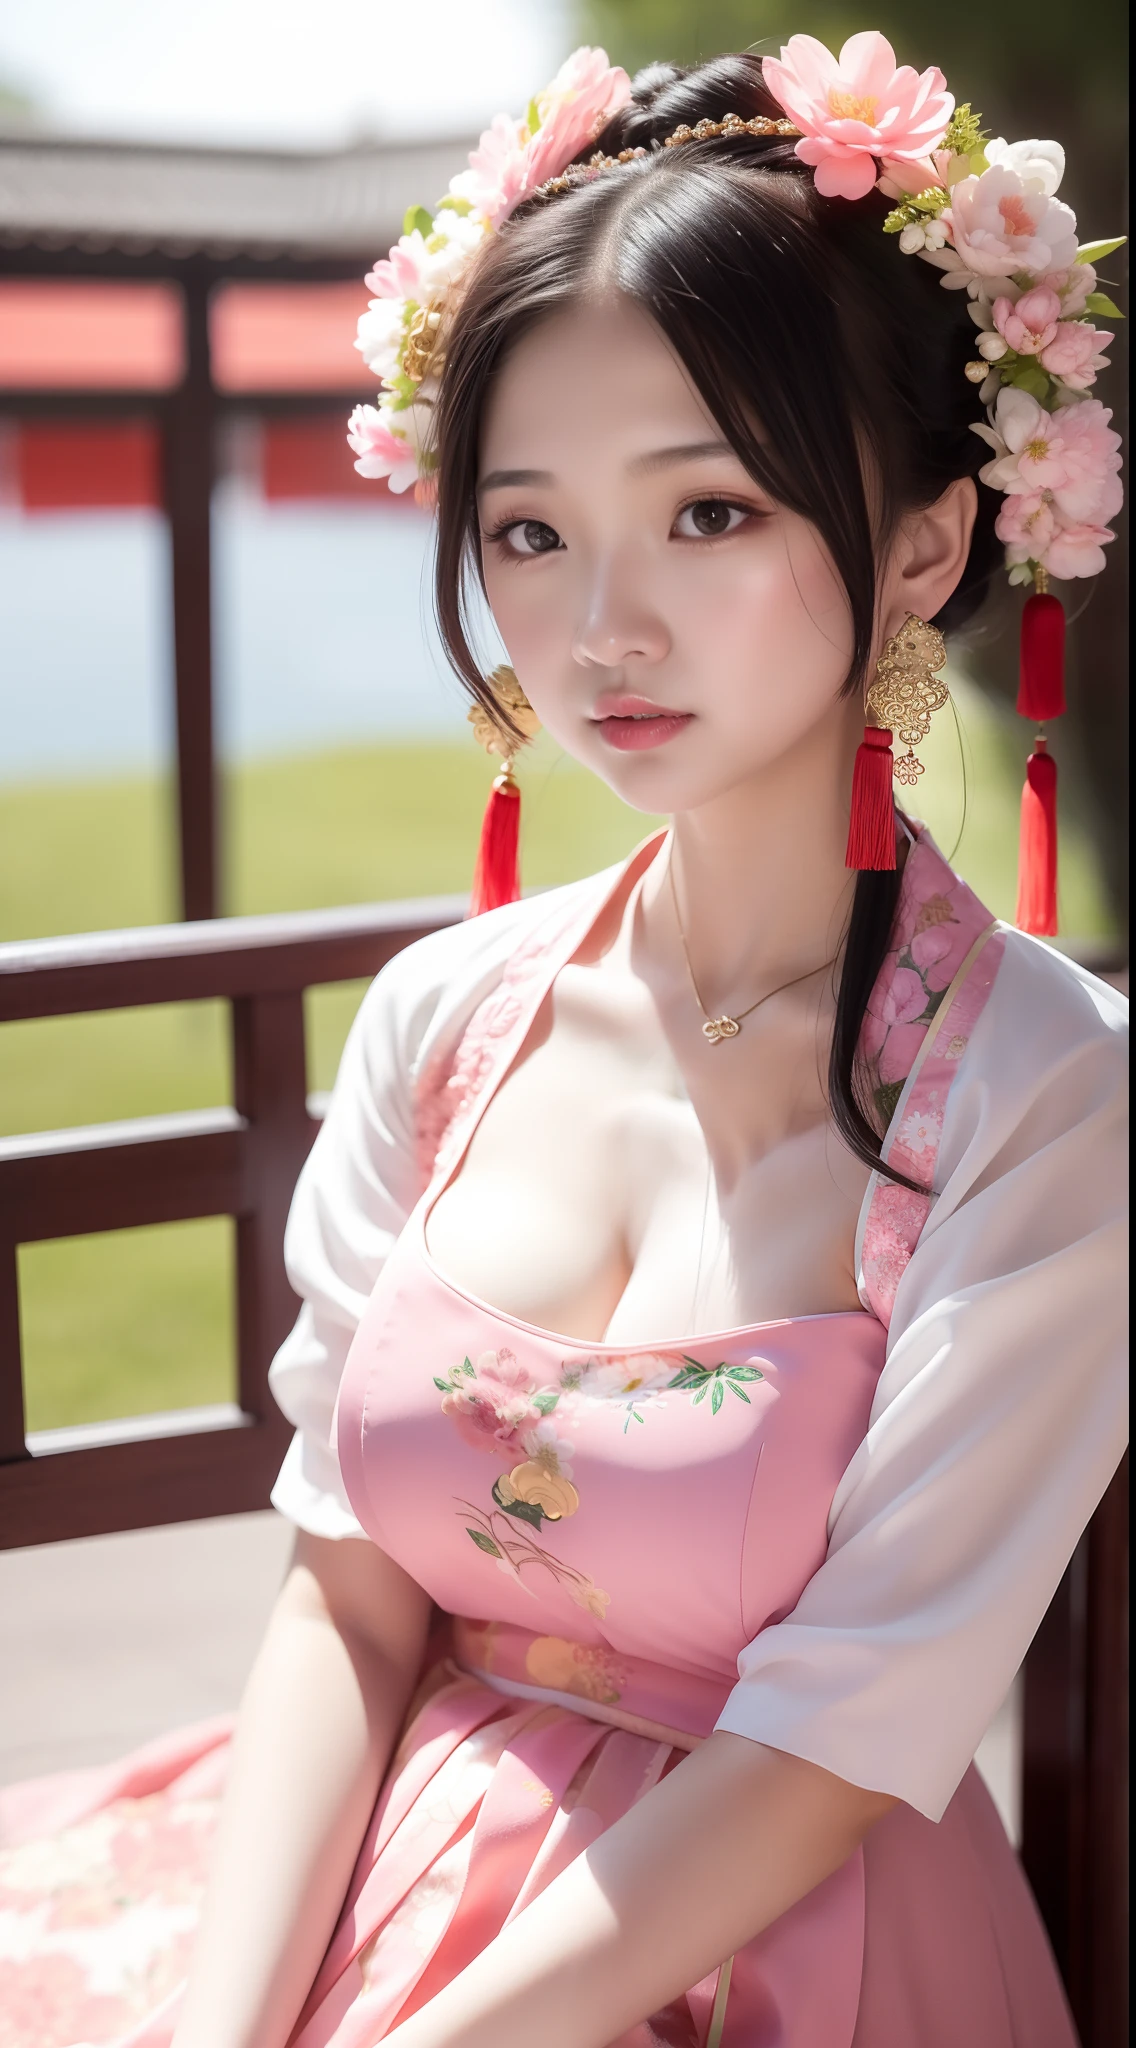 Close-up of a 年轻女孩 in a pink dress and a green flower headdress, 中国公主, 中国女孩, 宫 ， 穿汉服的女孩, Young 亚洲女孩, 中国古代公主, Cute 年轻女孩, 中式, 年轻女孩, 可爱美丽, 漂亮的人物画, 美丽的肖像图像, 很漂亮的女孩, 亚洲女孩, 中国传统的, 中国服饰，巨大的乳房，大的 